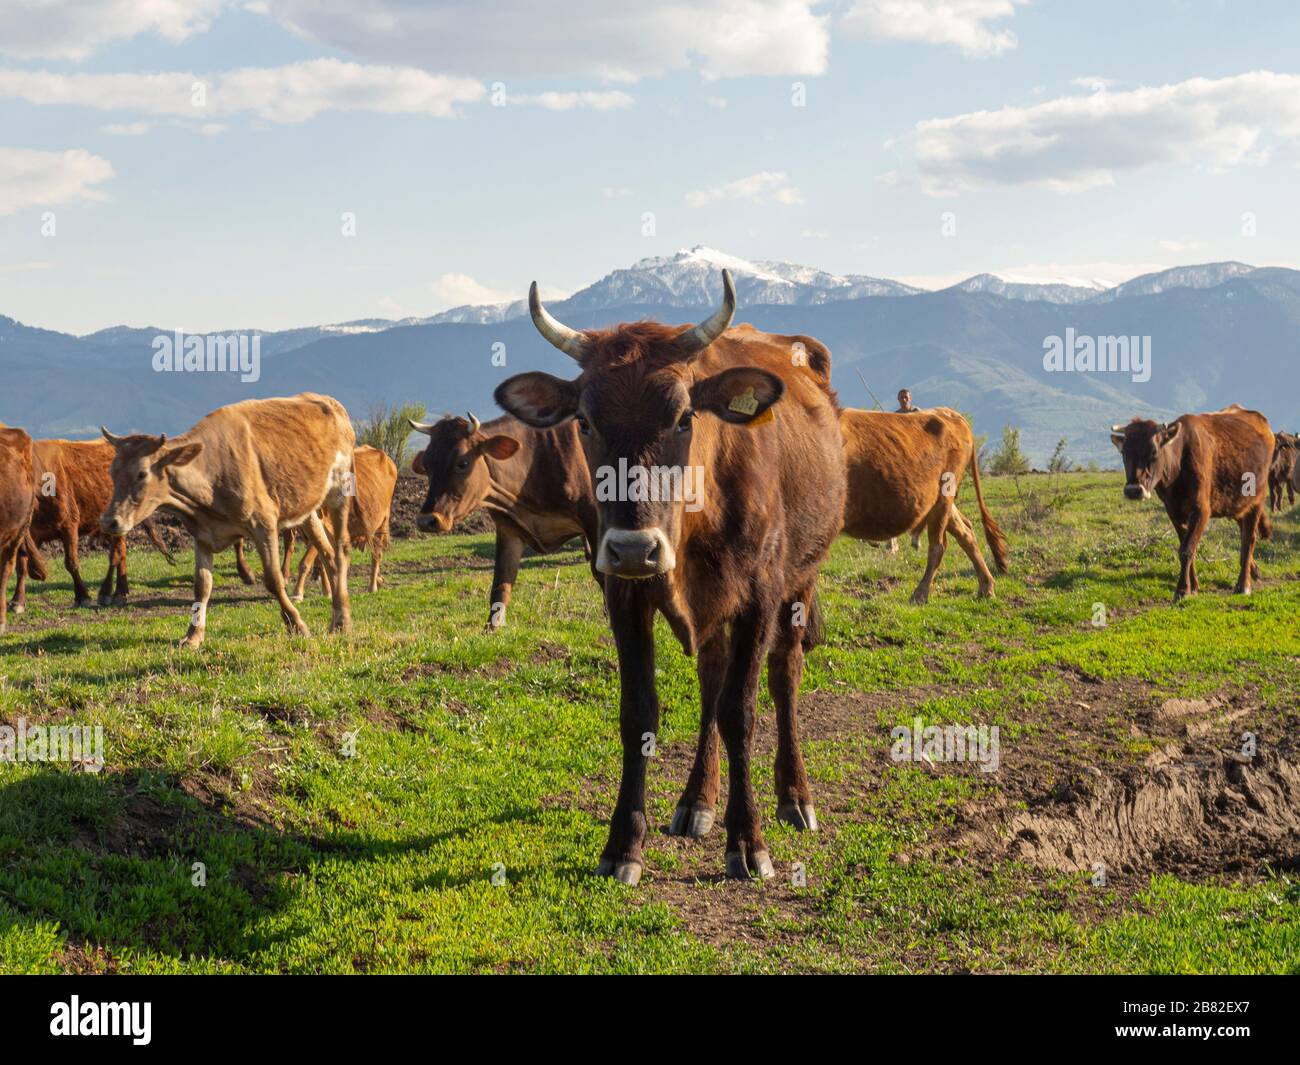 Curious cows in Gori, Georgia. Birthplace of Soviet leader Joseph Stalin. Stock Photo